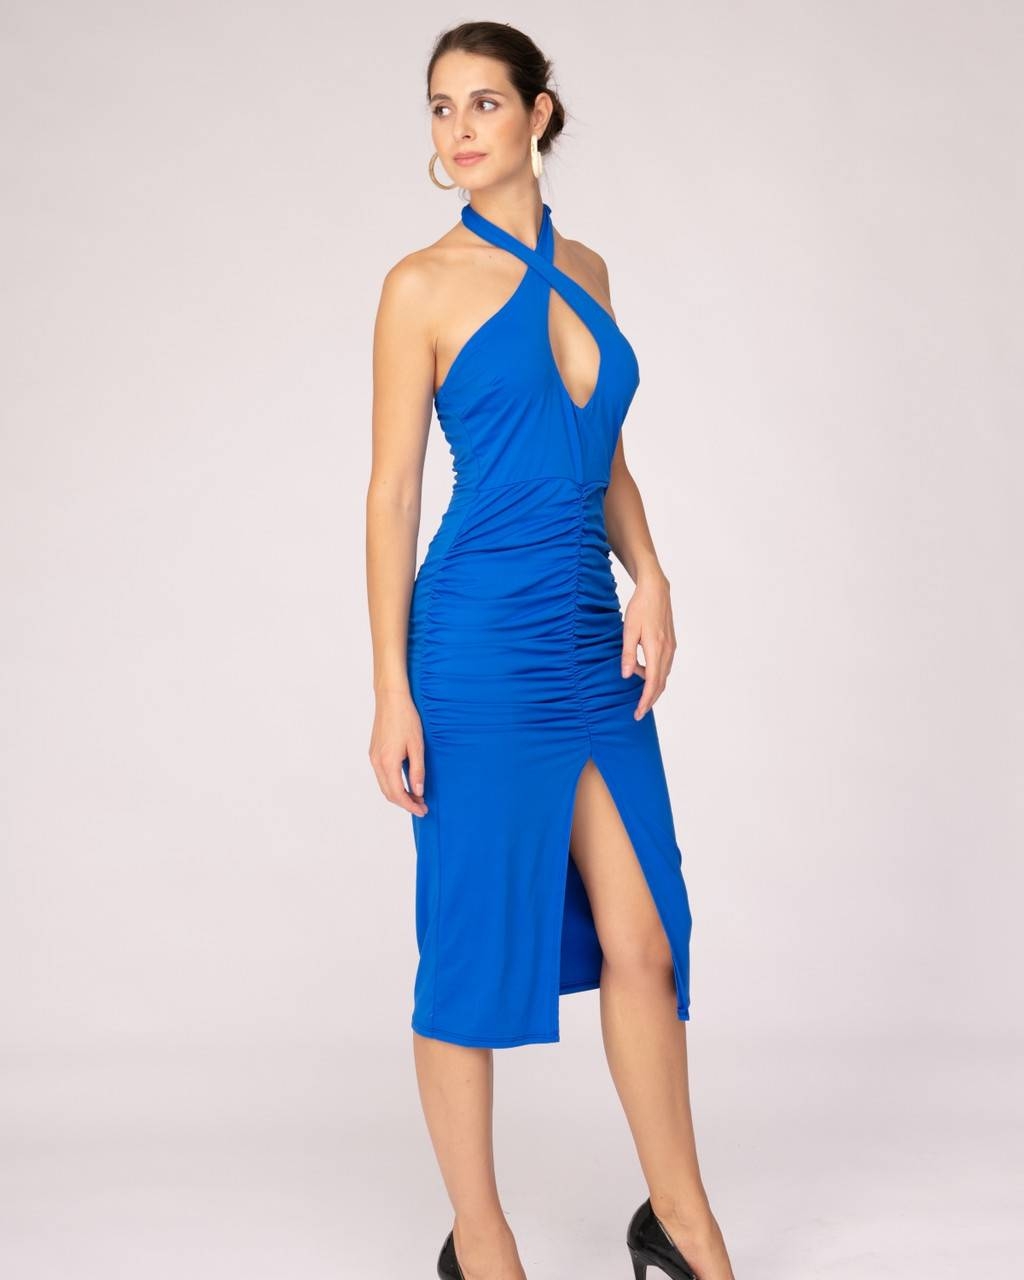 Halter Neck Front Cut Out Dress - Royal Blue